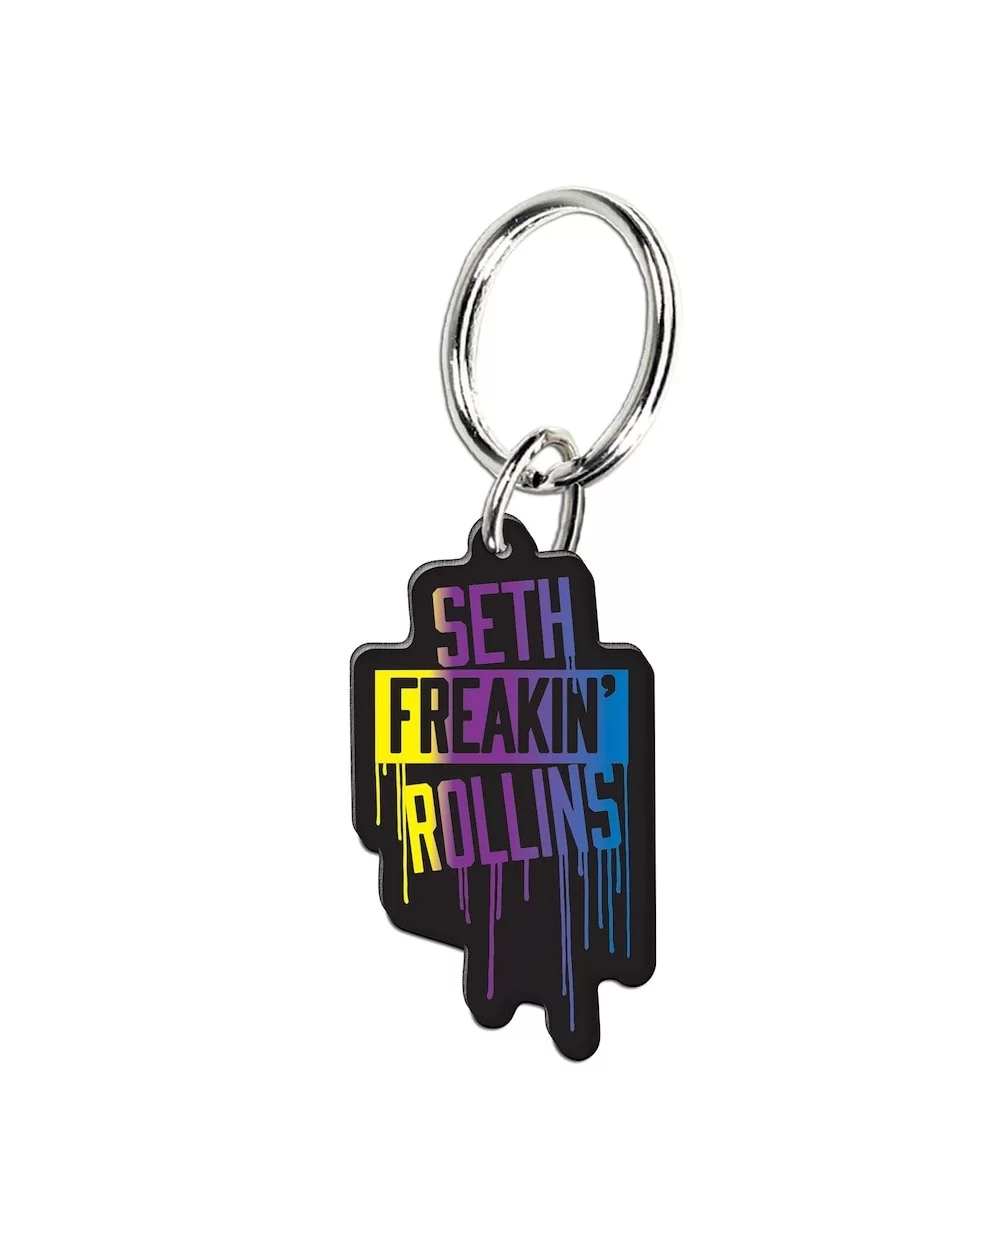 Seth "Freakin" Rollins Key Ring $3.09 Accessories